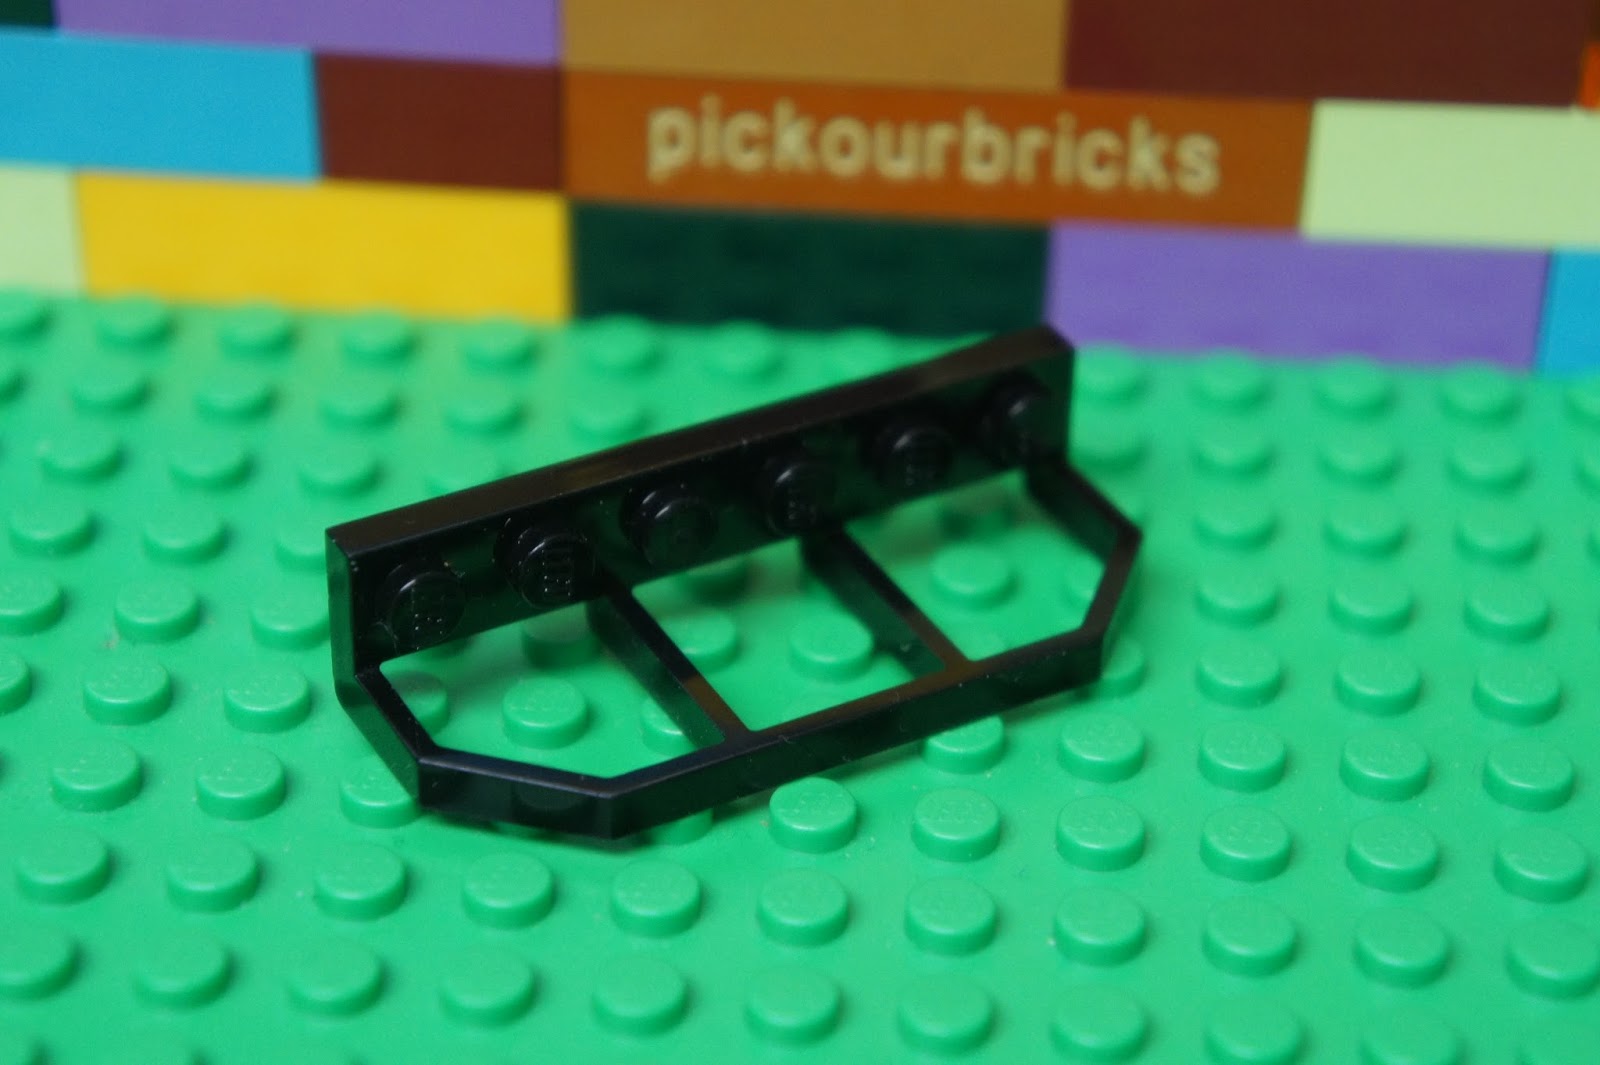 2 Pcs LEGO 3028 Bright Green 6x12 DISPLAY PLATE 6 x 12 Building Blocks